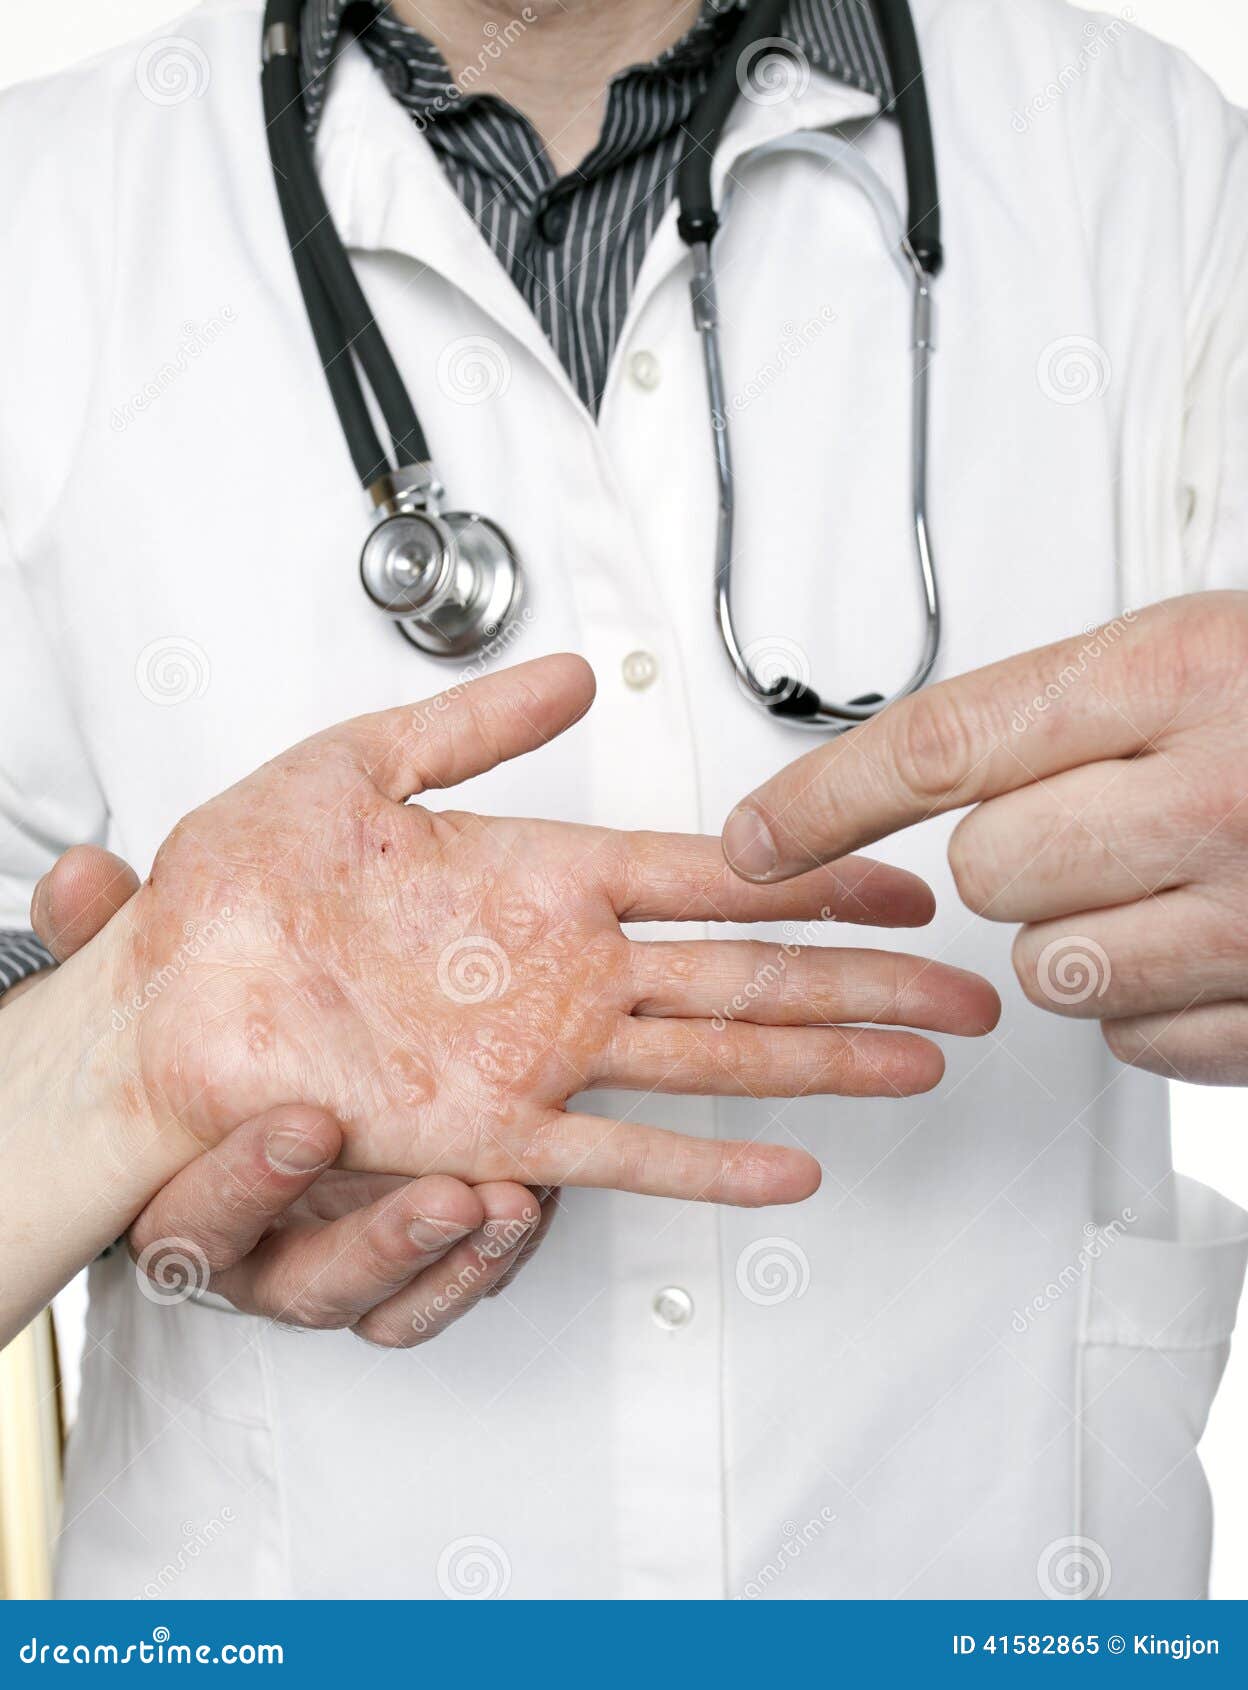 dermatologist examining hand with severe eczema